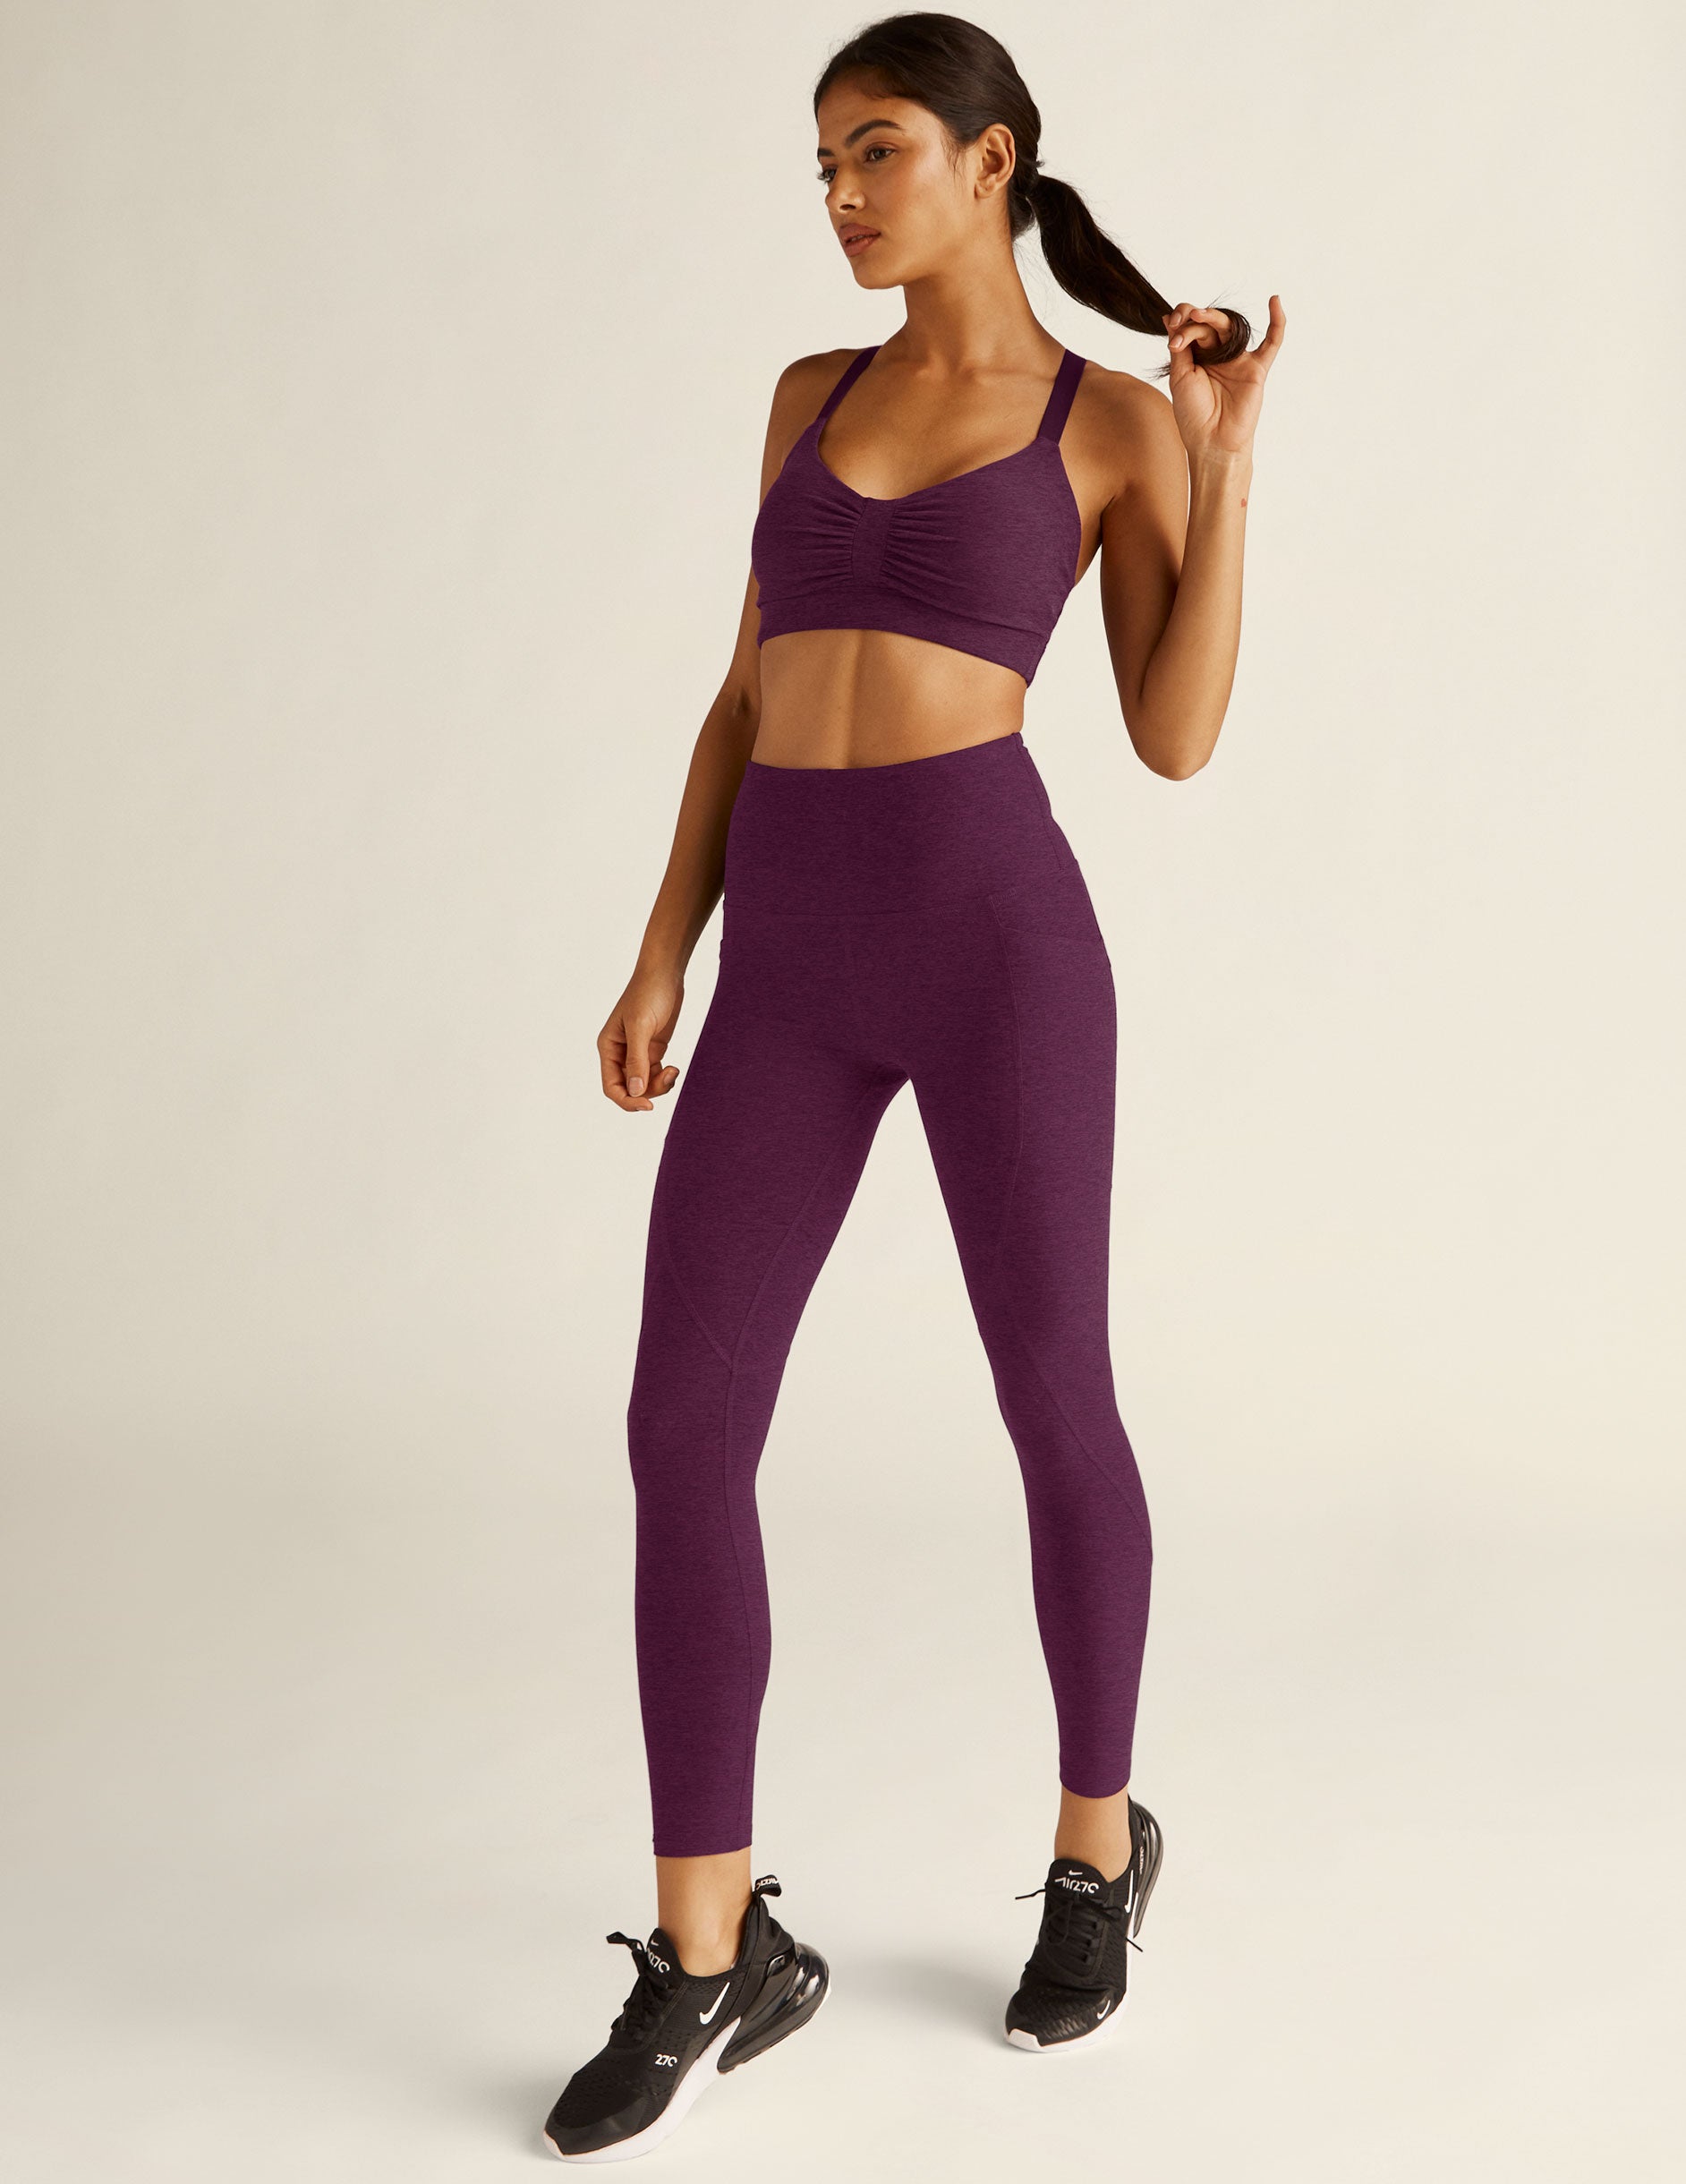 Beyond Yoga Women's size M Medium Purple Side Gathered Low Rise